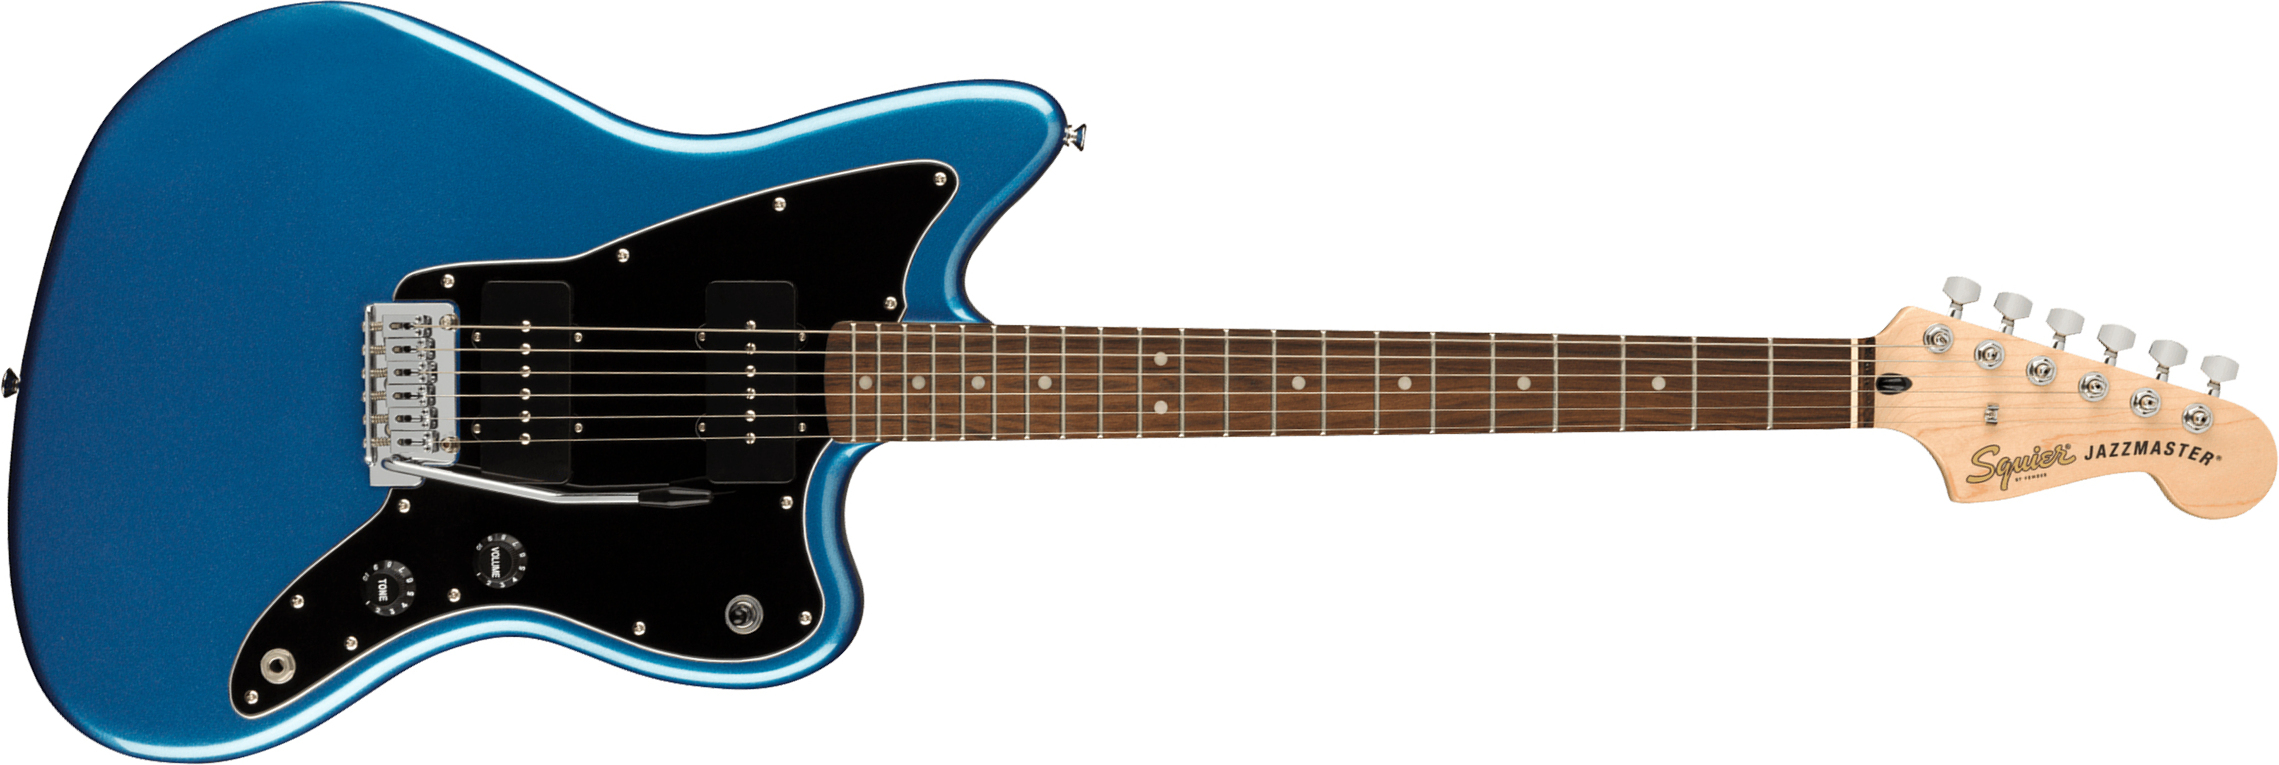 Squier Jazzmaster Affinity 2021 2s Trem Lau - Lake Placid Blue - Guitarra electrica retro rock - Main picture